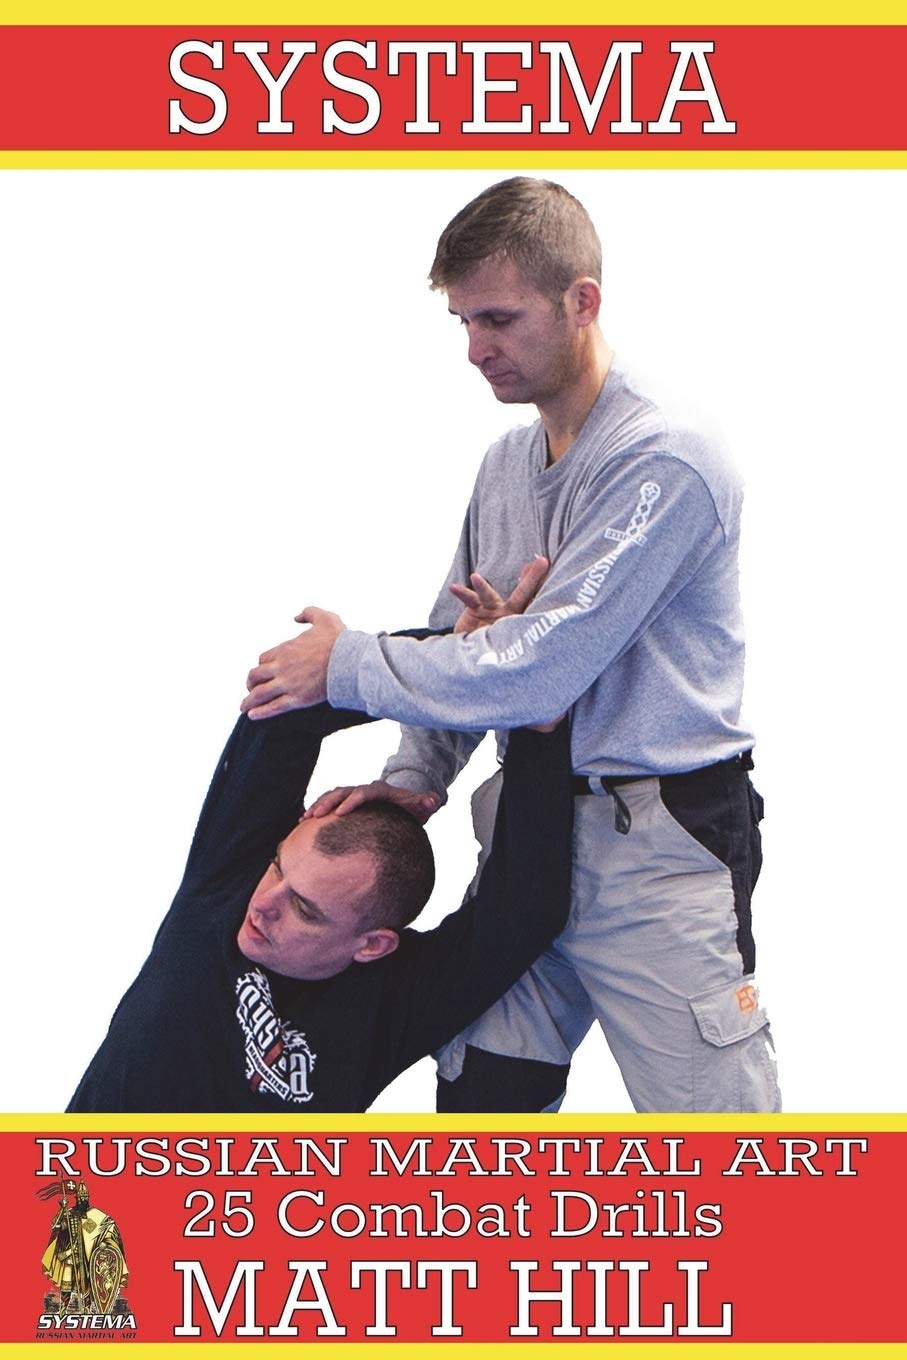 Systema: Russian Martial Art 25 Combat Drills Book by Matt Hill - Budovideos